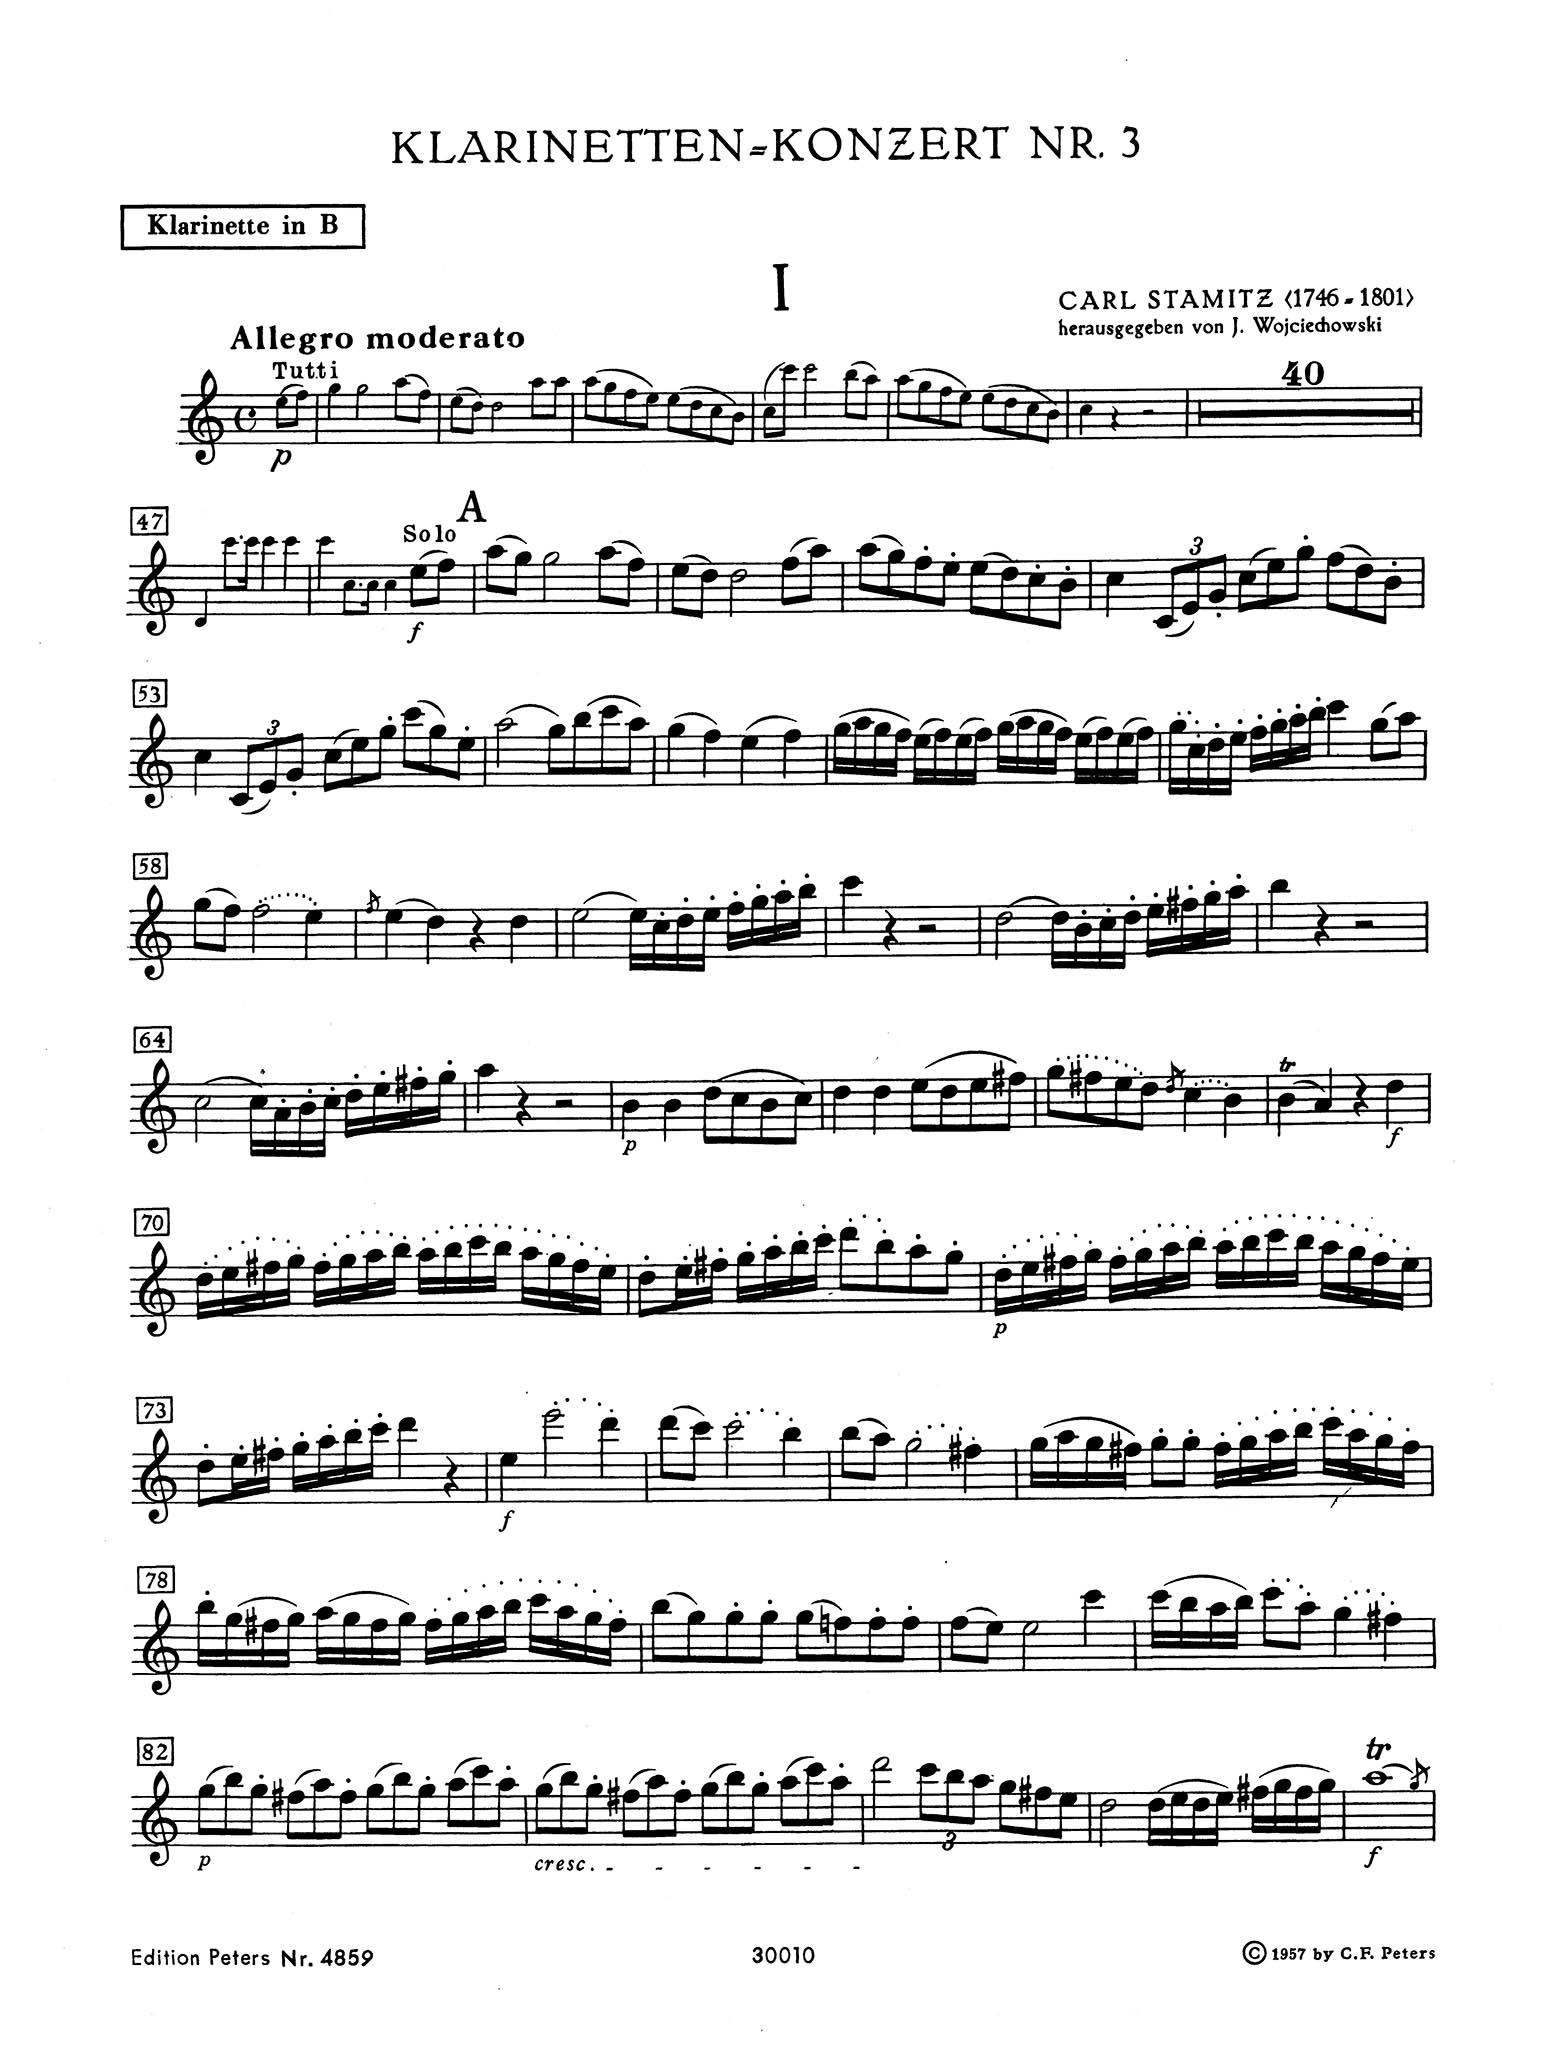 Clarinet Concerto No. 7 (Kaiser) in B-flat Major Clarinet part